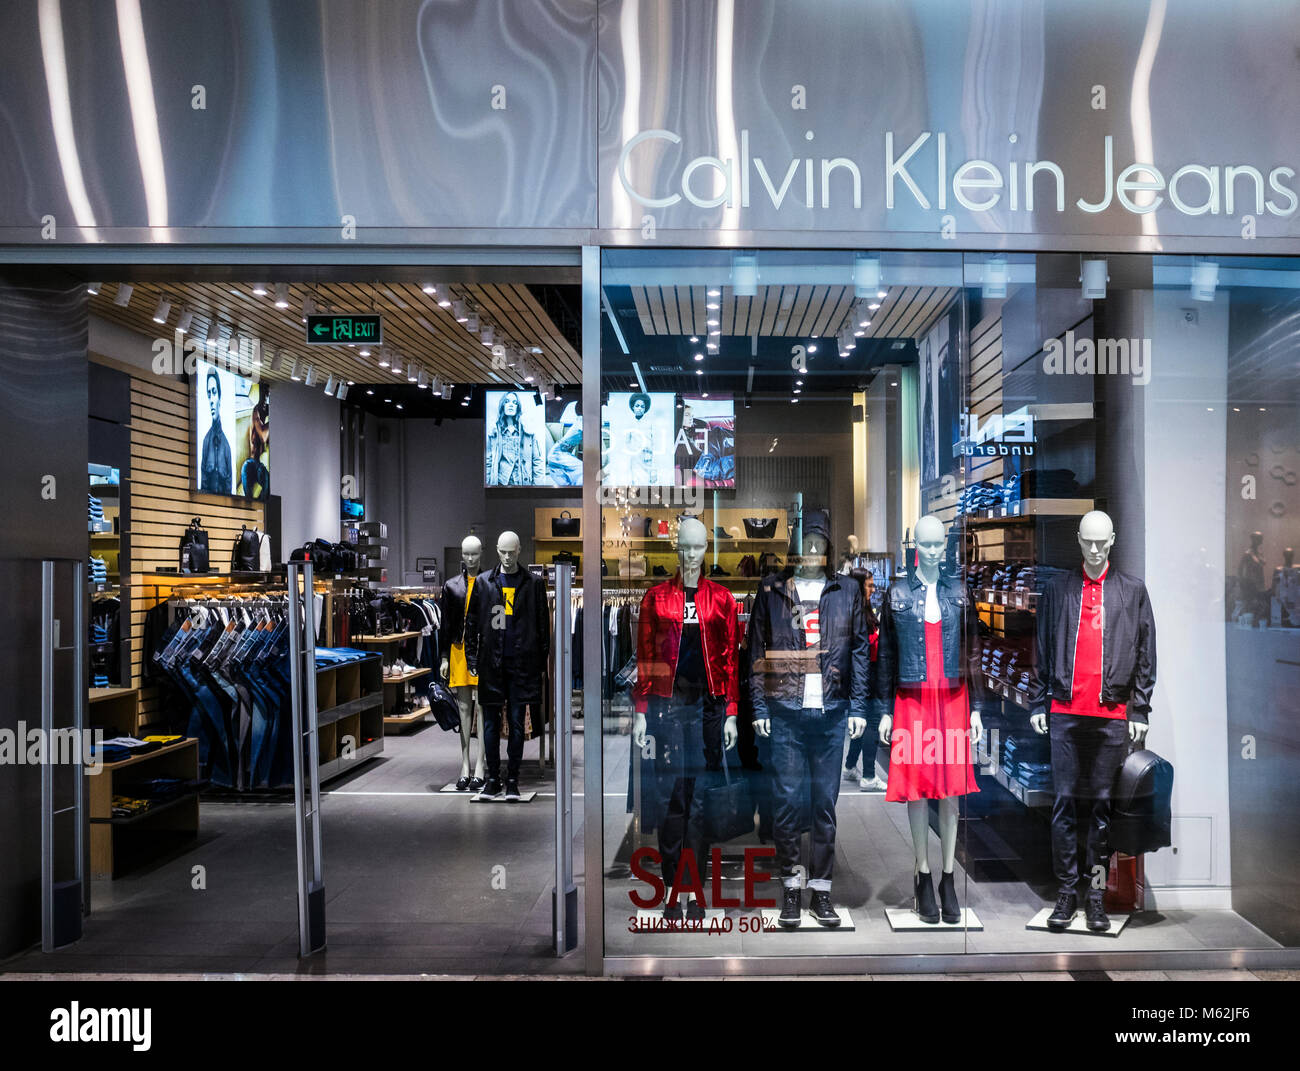 Outlet Calvin Klein Jeans Best Sale, 56% OFF | www.ingeniovirtual.com